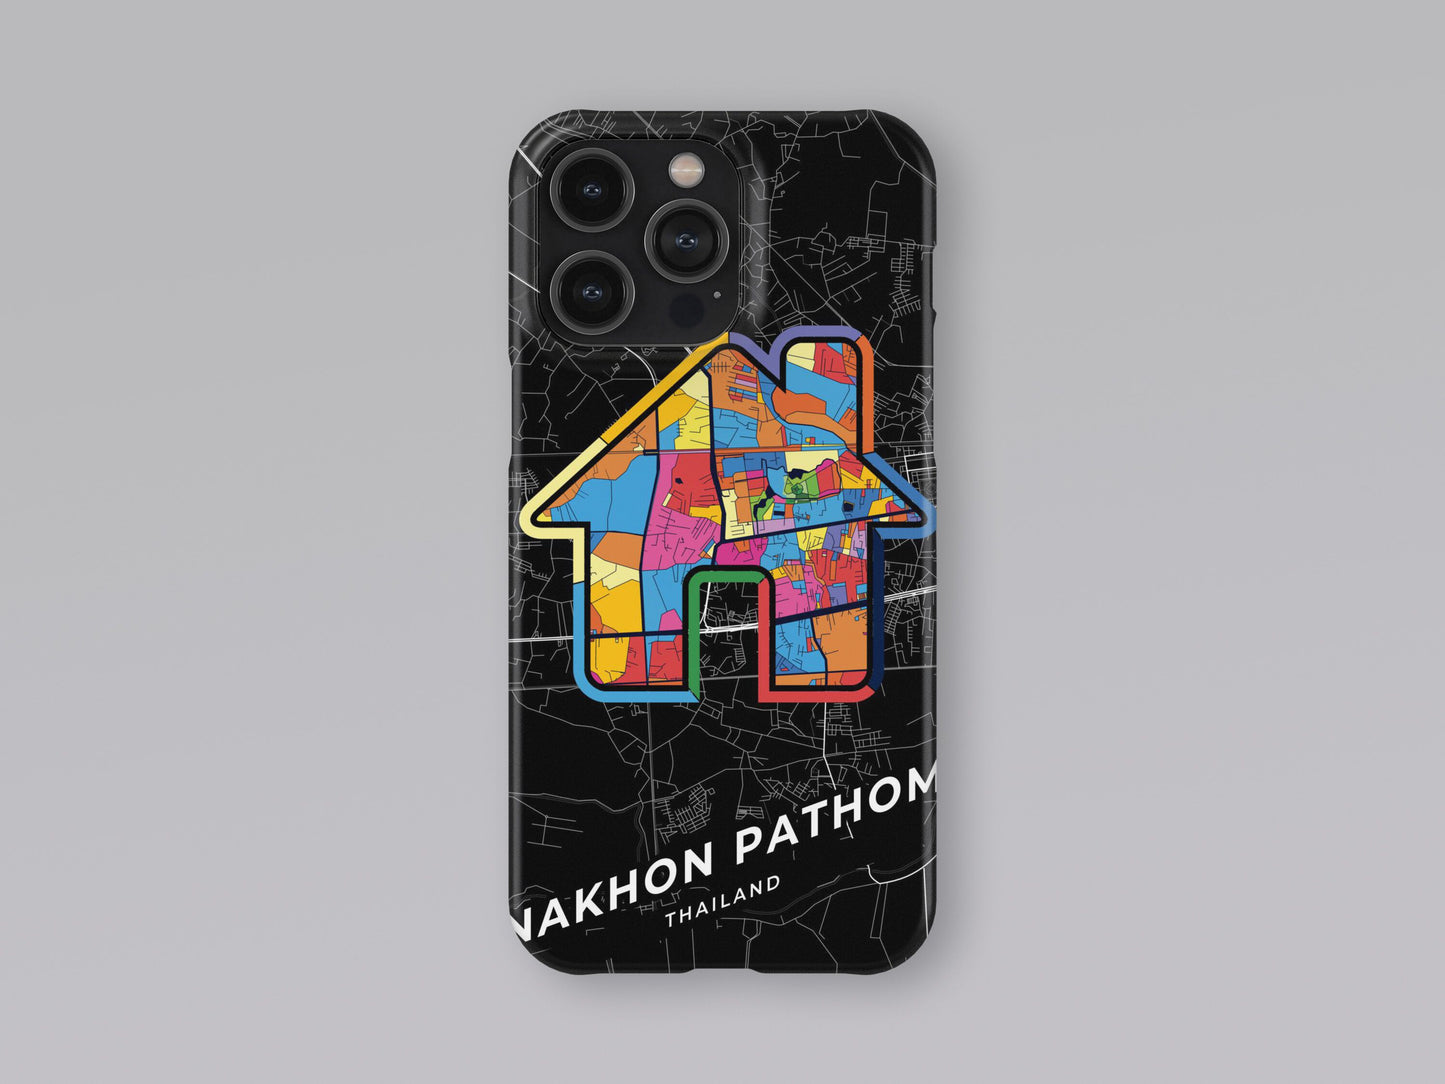 Nakhon Pathom Thailand slim phone case with colorful icon 3